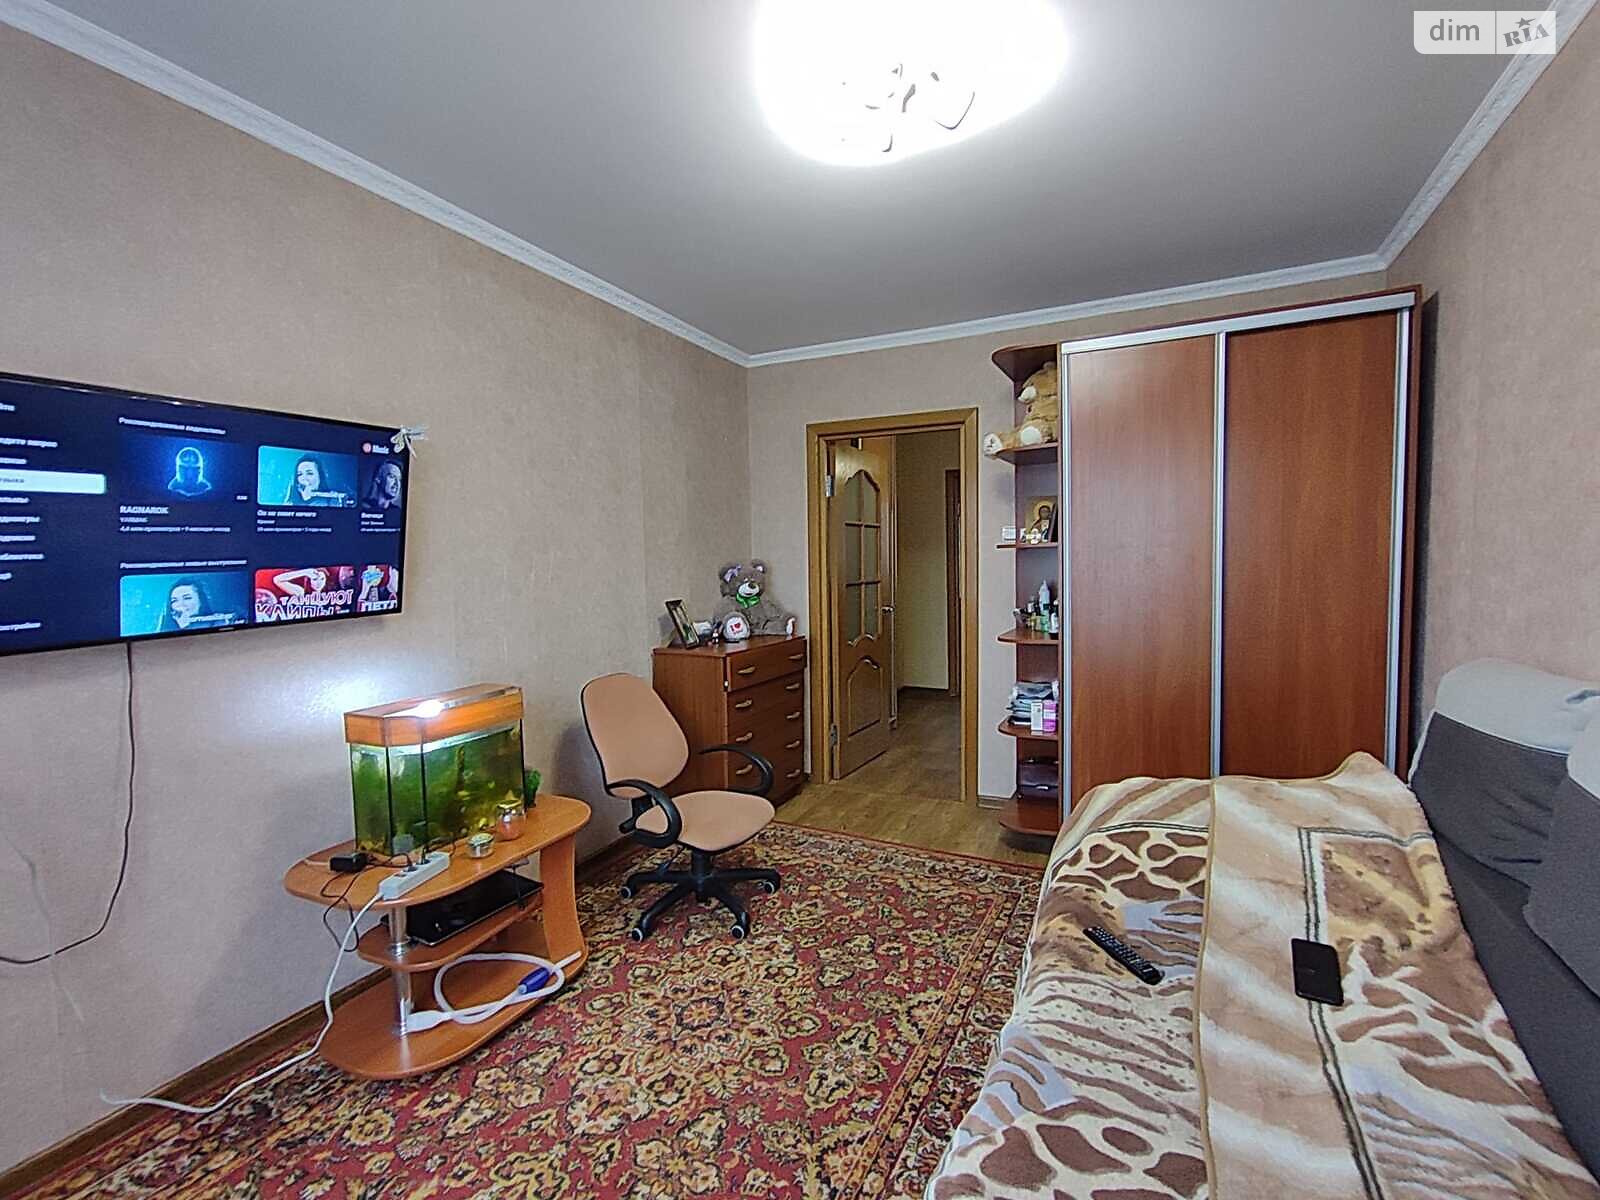 Продажа трехкомнатной квартиры в Черкассах, на ул. Припортовая, район Мытница фото 1